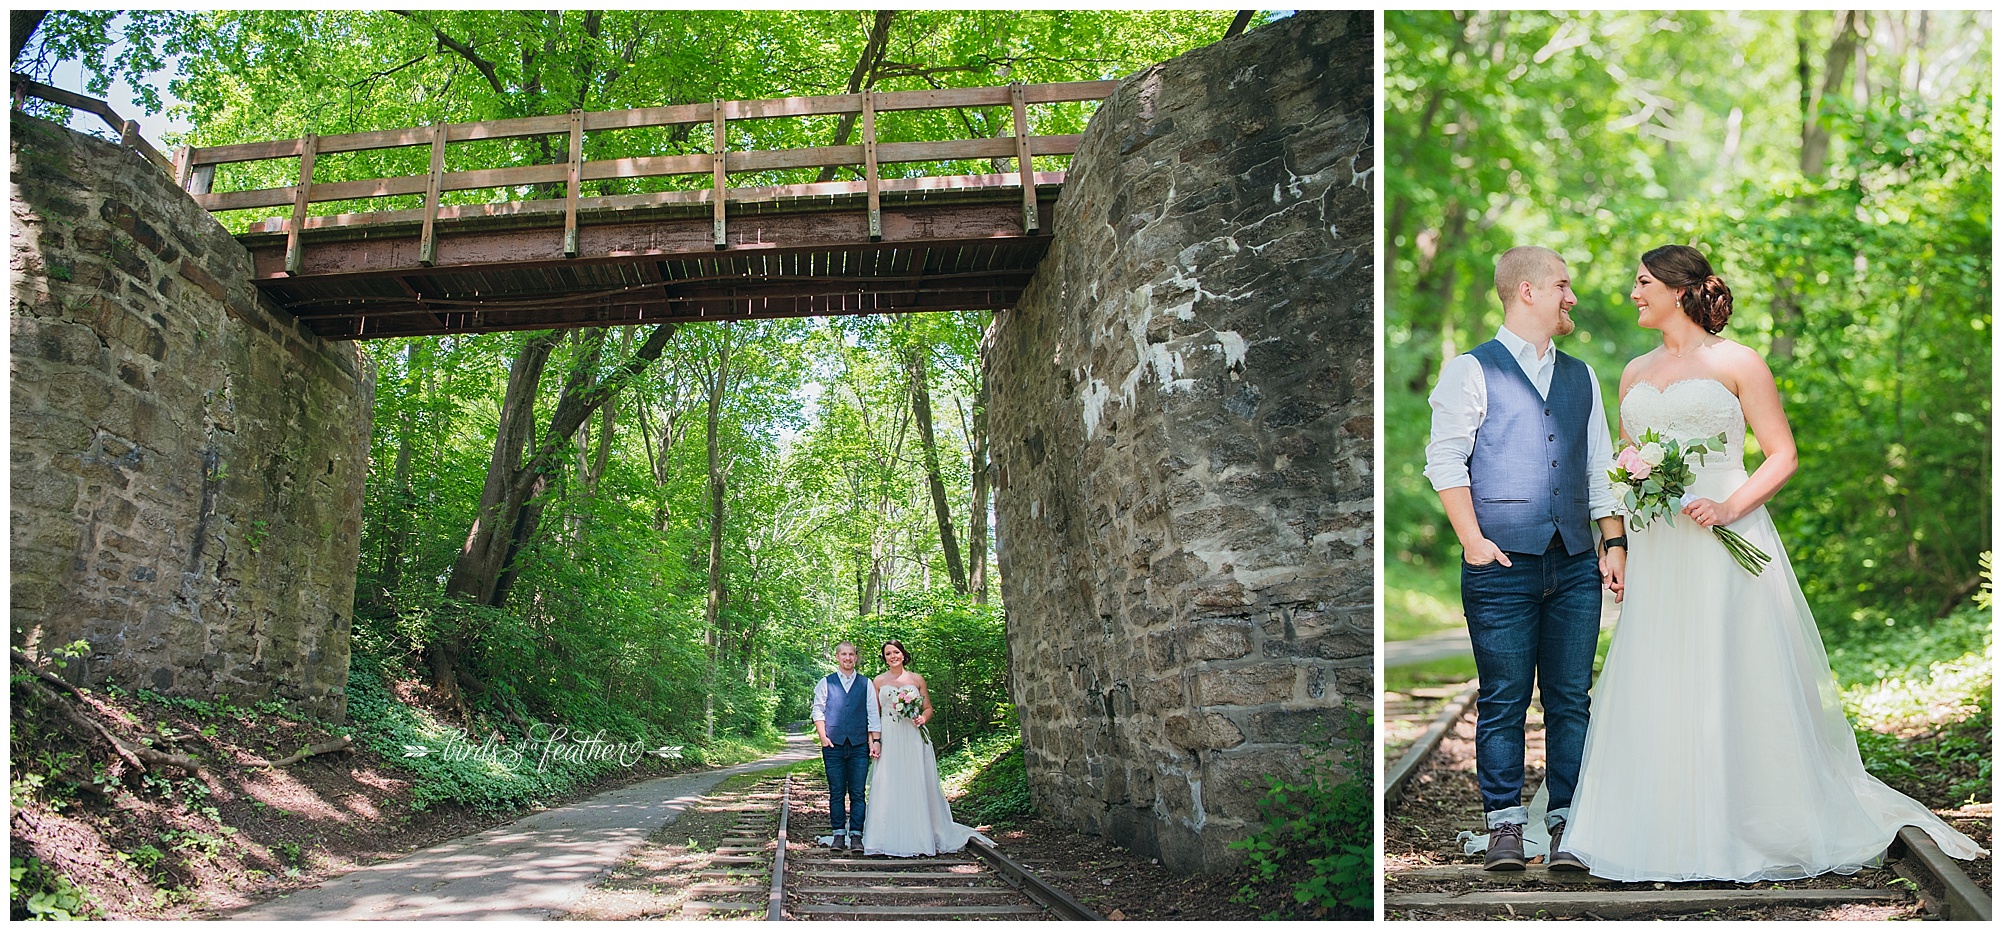 Birds of a Feather Photography, Independent Park Wedding, Breinigsville PA, Wedding Photography, Wedding Photographer